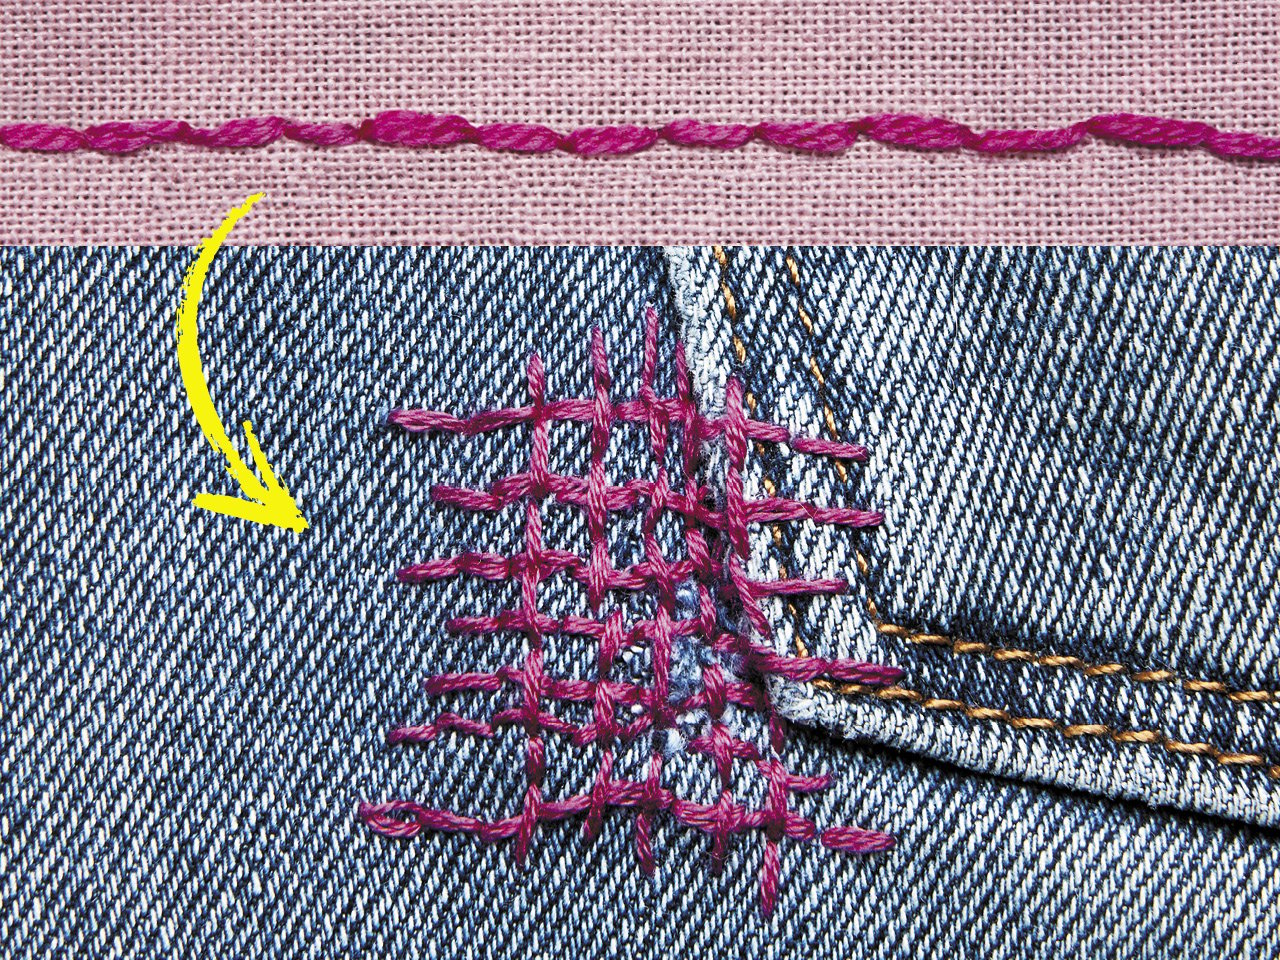 Demonstration of backstitch using purple thread on denim